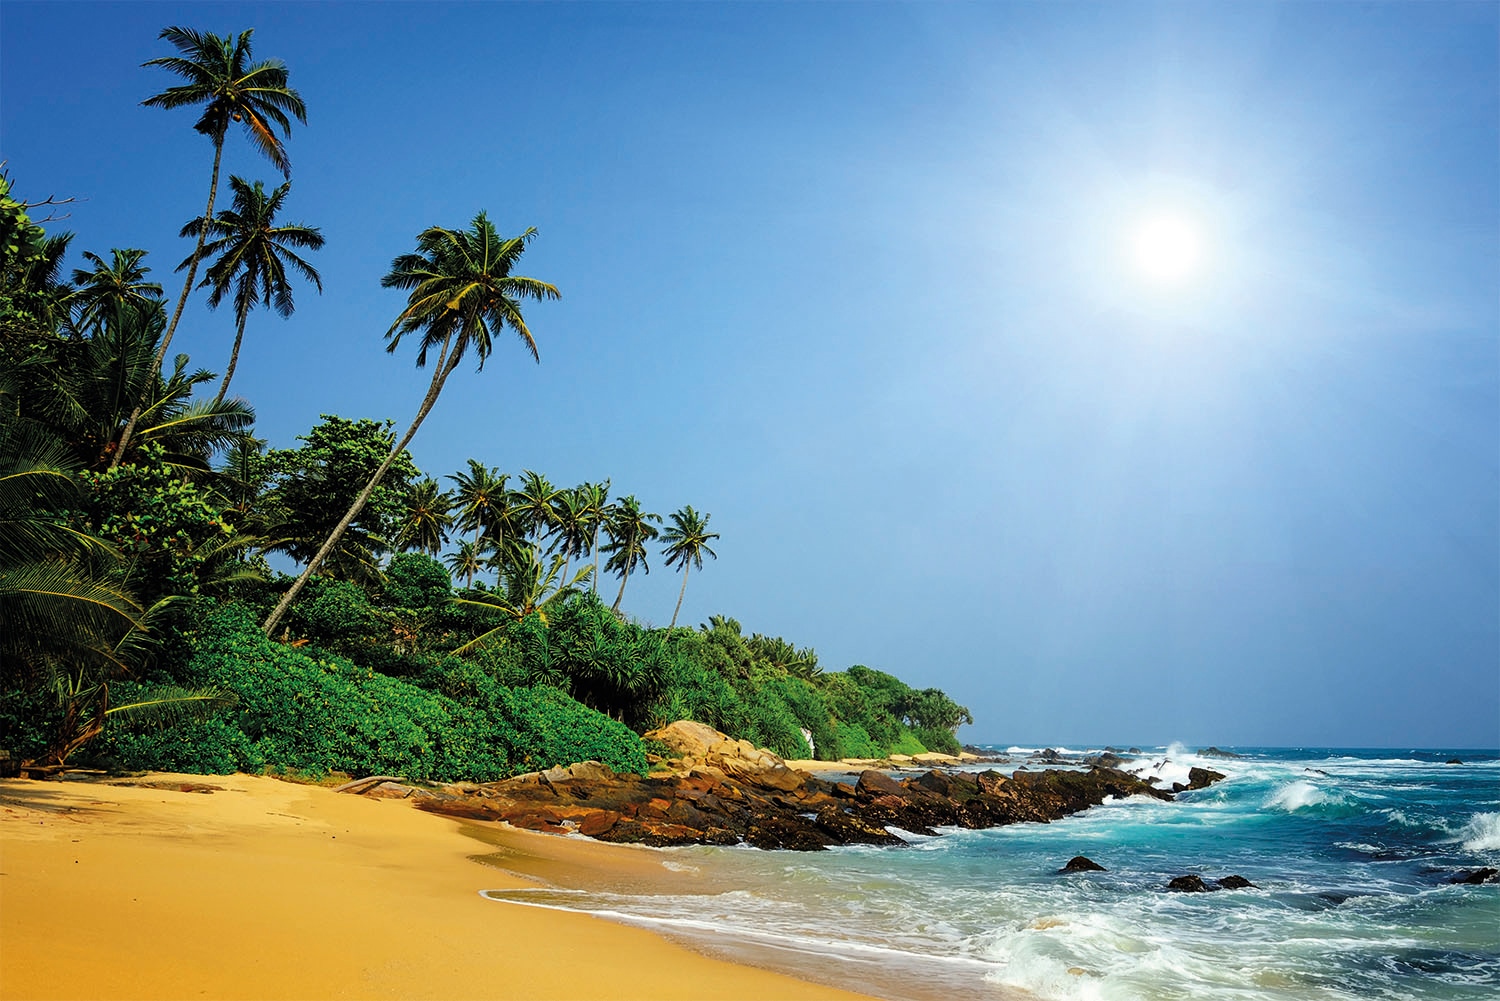 Papermoon Fototapete "Sri Lanka Tropical Beach" von Papermoon